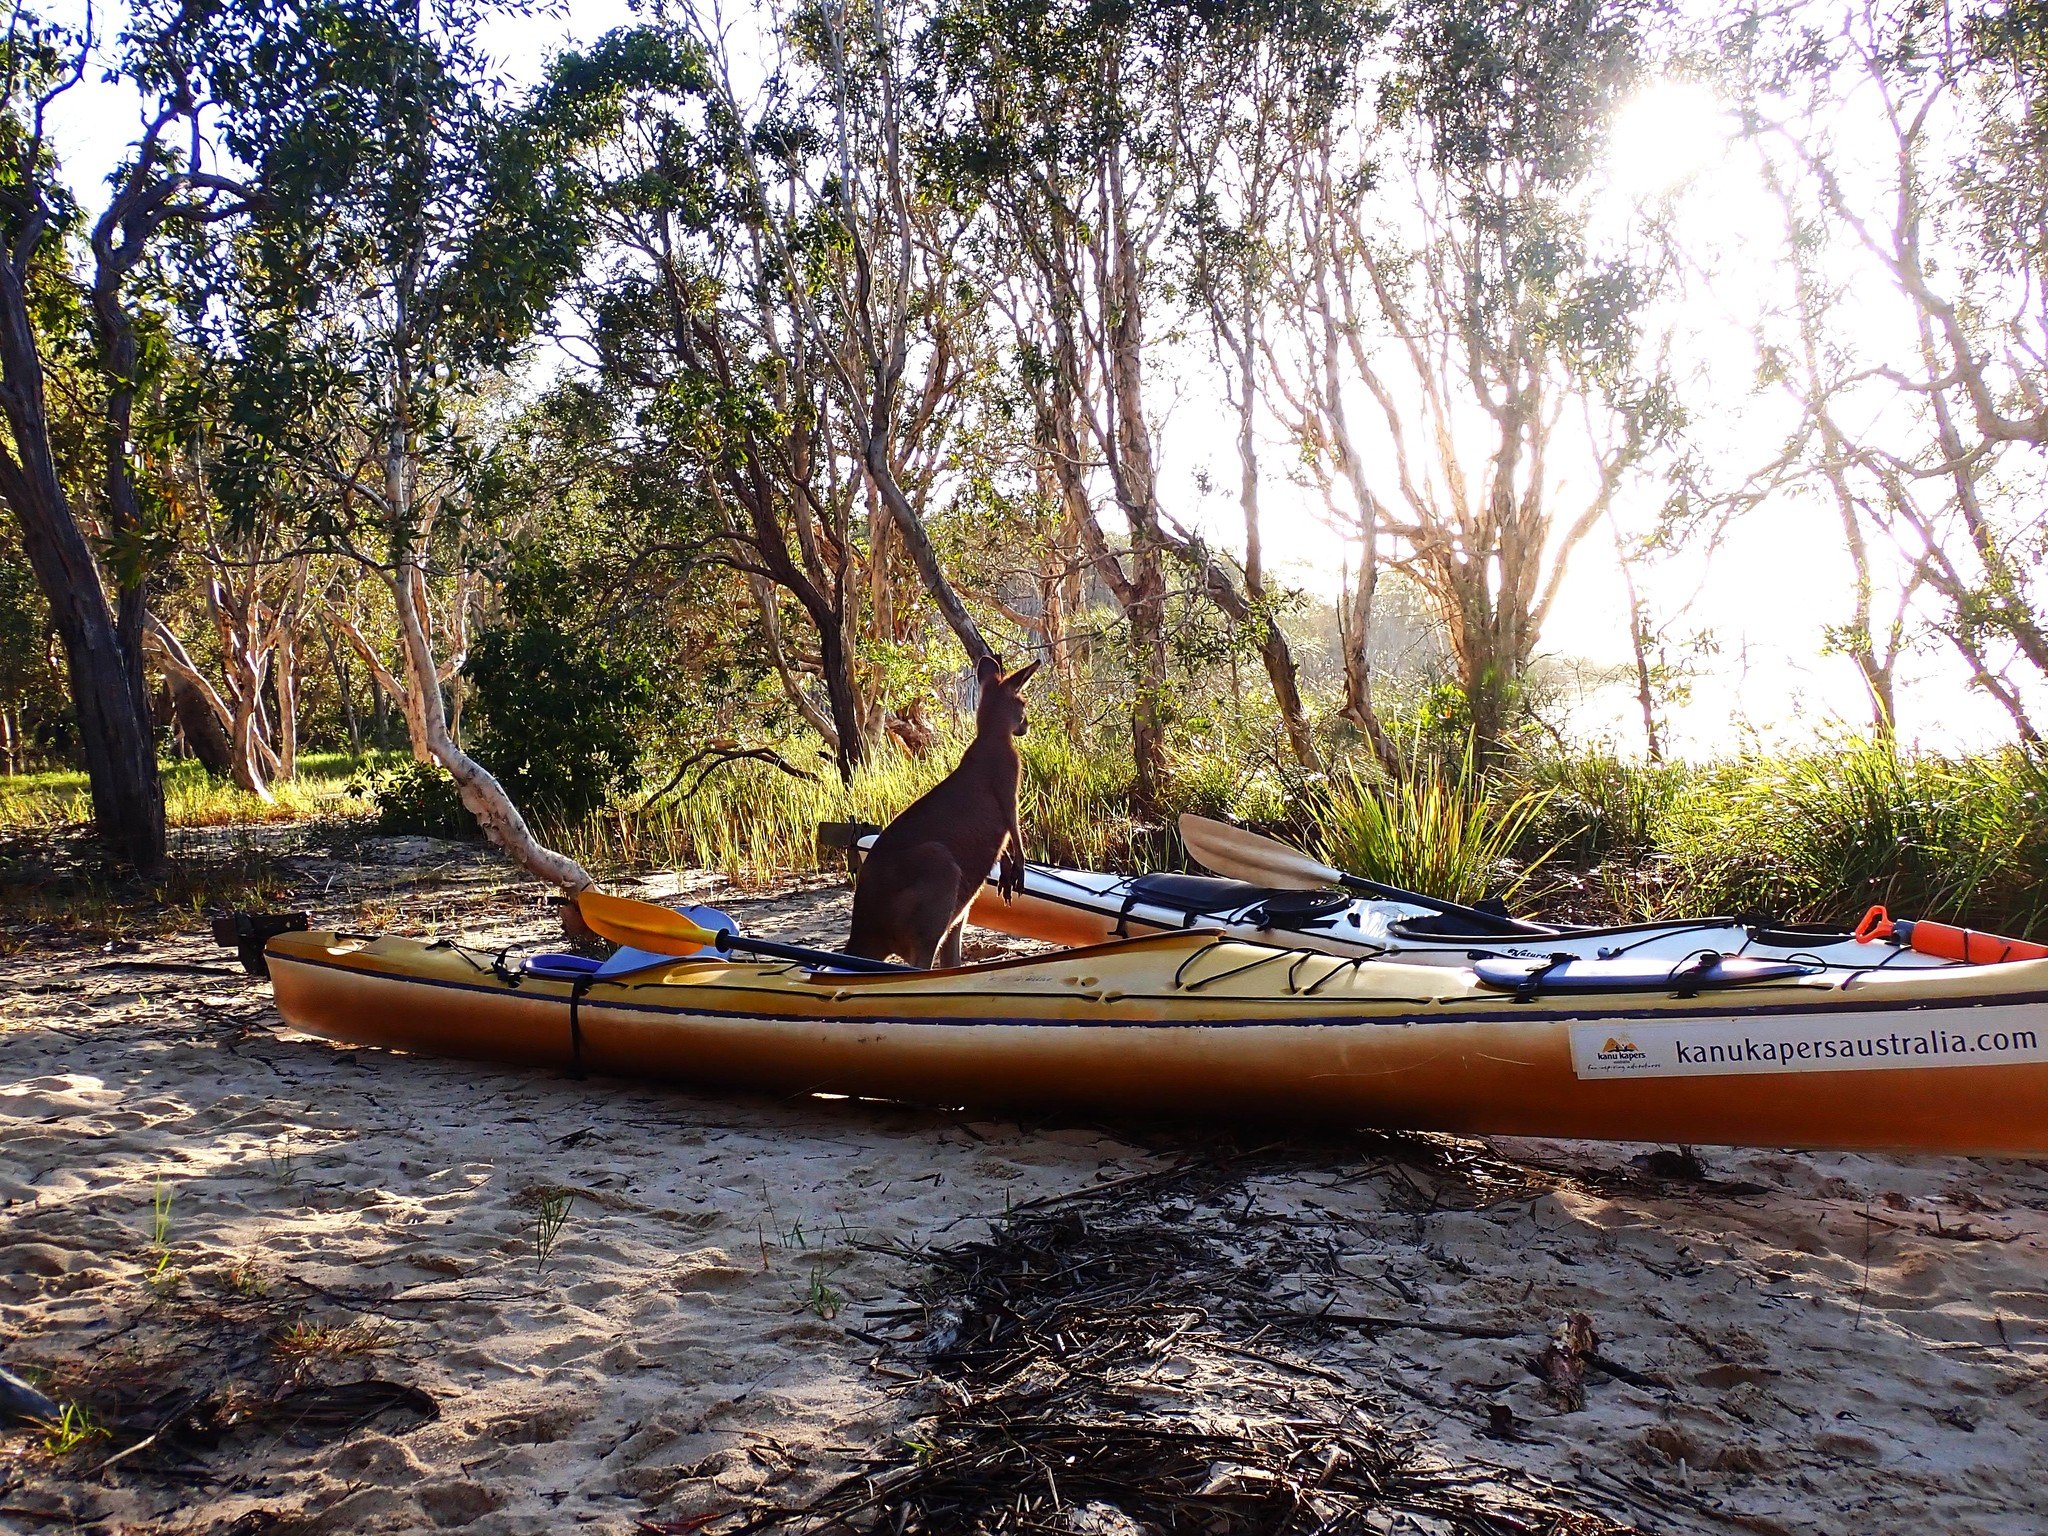 contemplating coming for a kayak? Just do it! we are here waiting.
#kayak #noosaeverglades #lakecootharaba #kanukapers #australianwildlife #nature #thingstodonoosariver